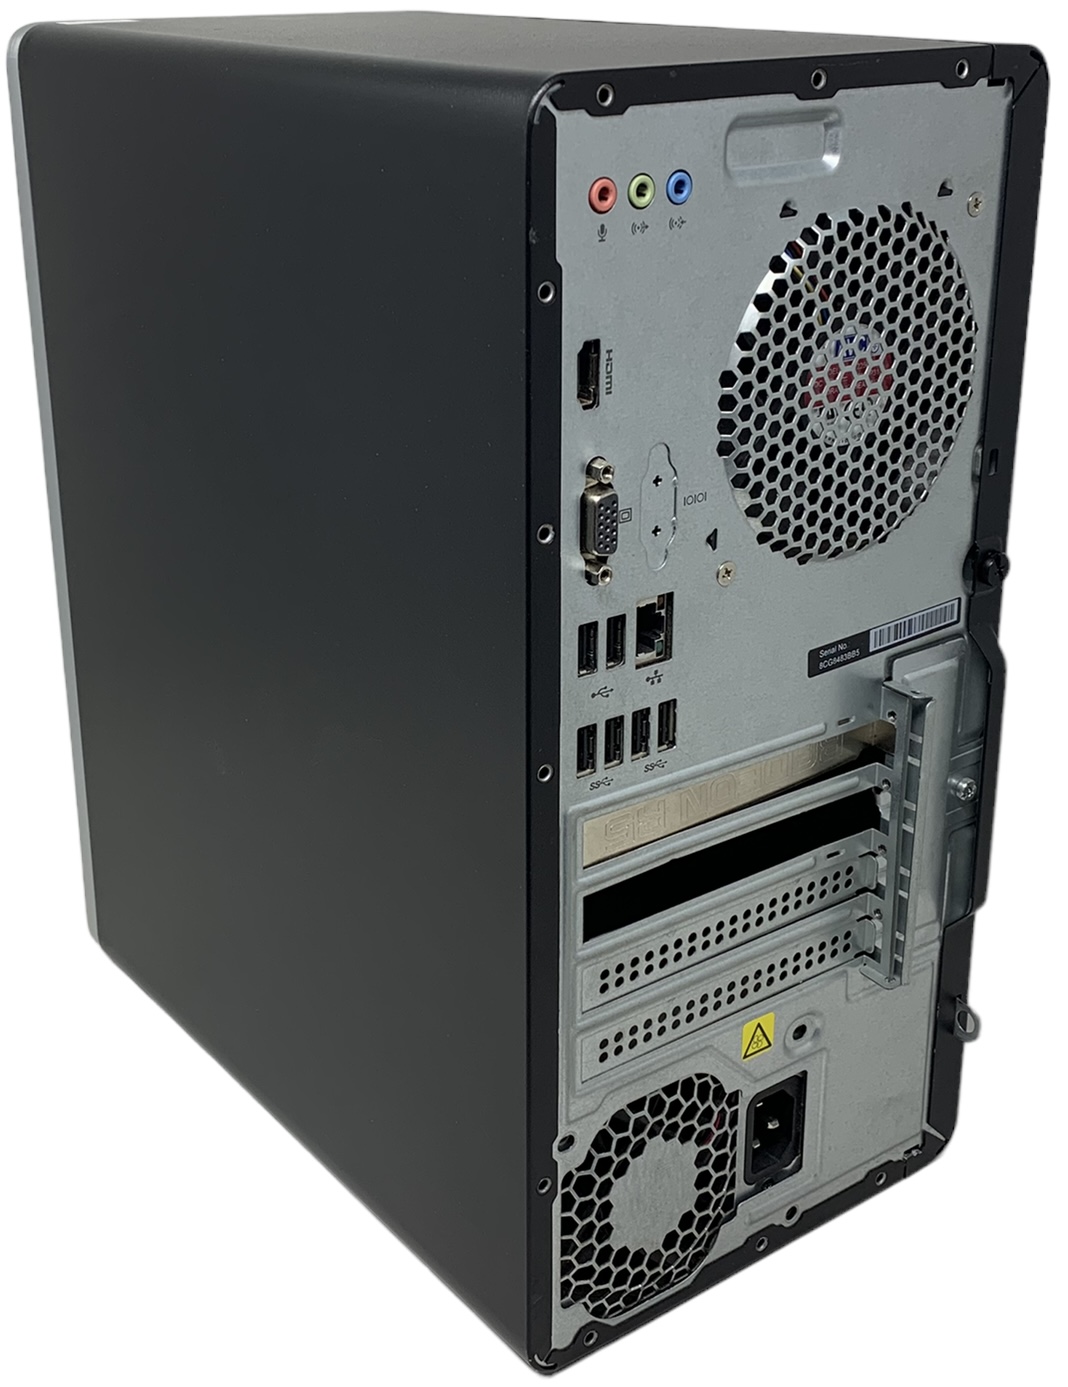 HP Pavillion Disk 590-P0099nl AMD A10 16-240 SSD Gar. 12M RSD5406